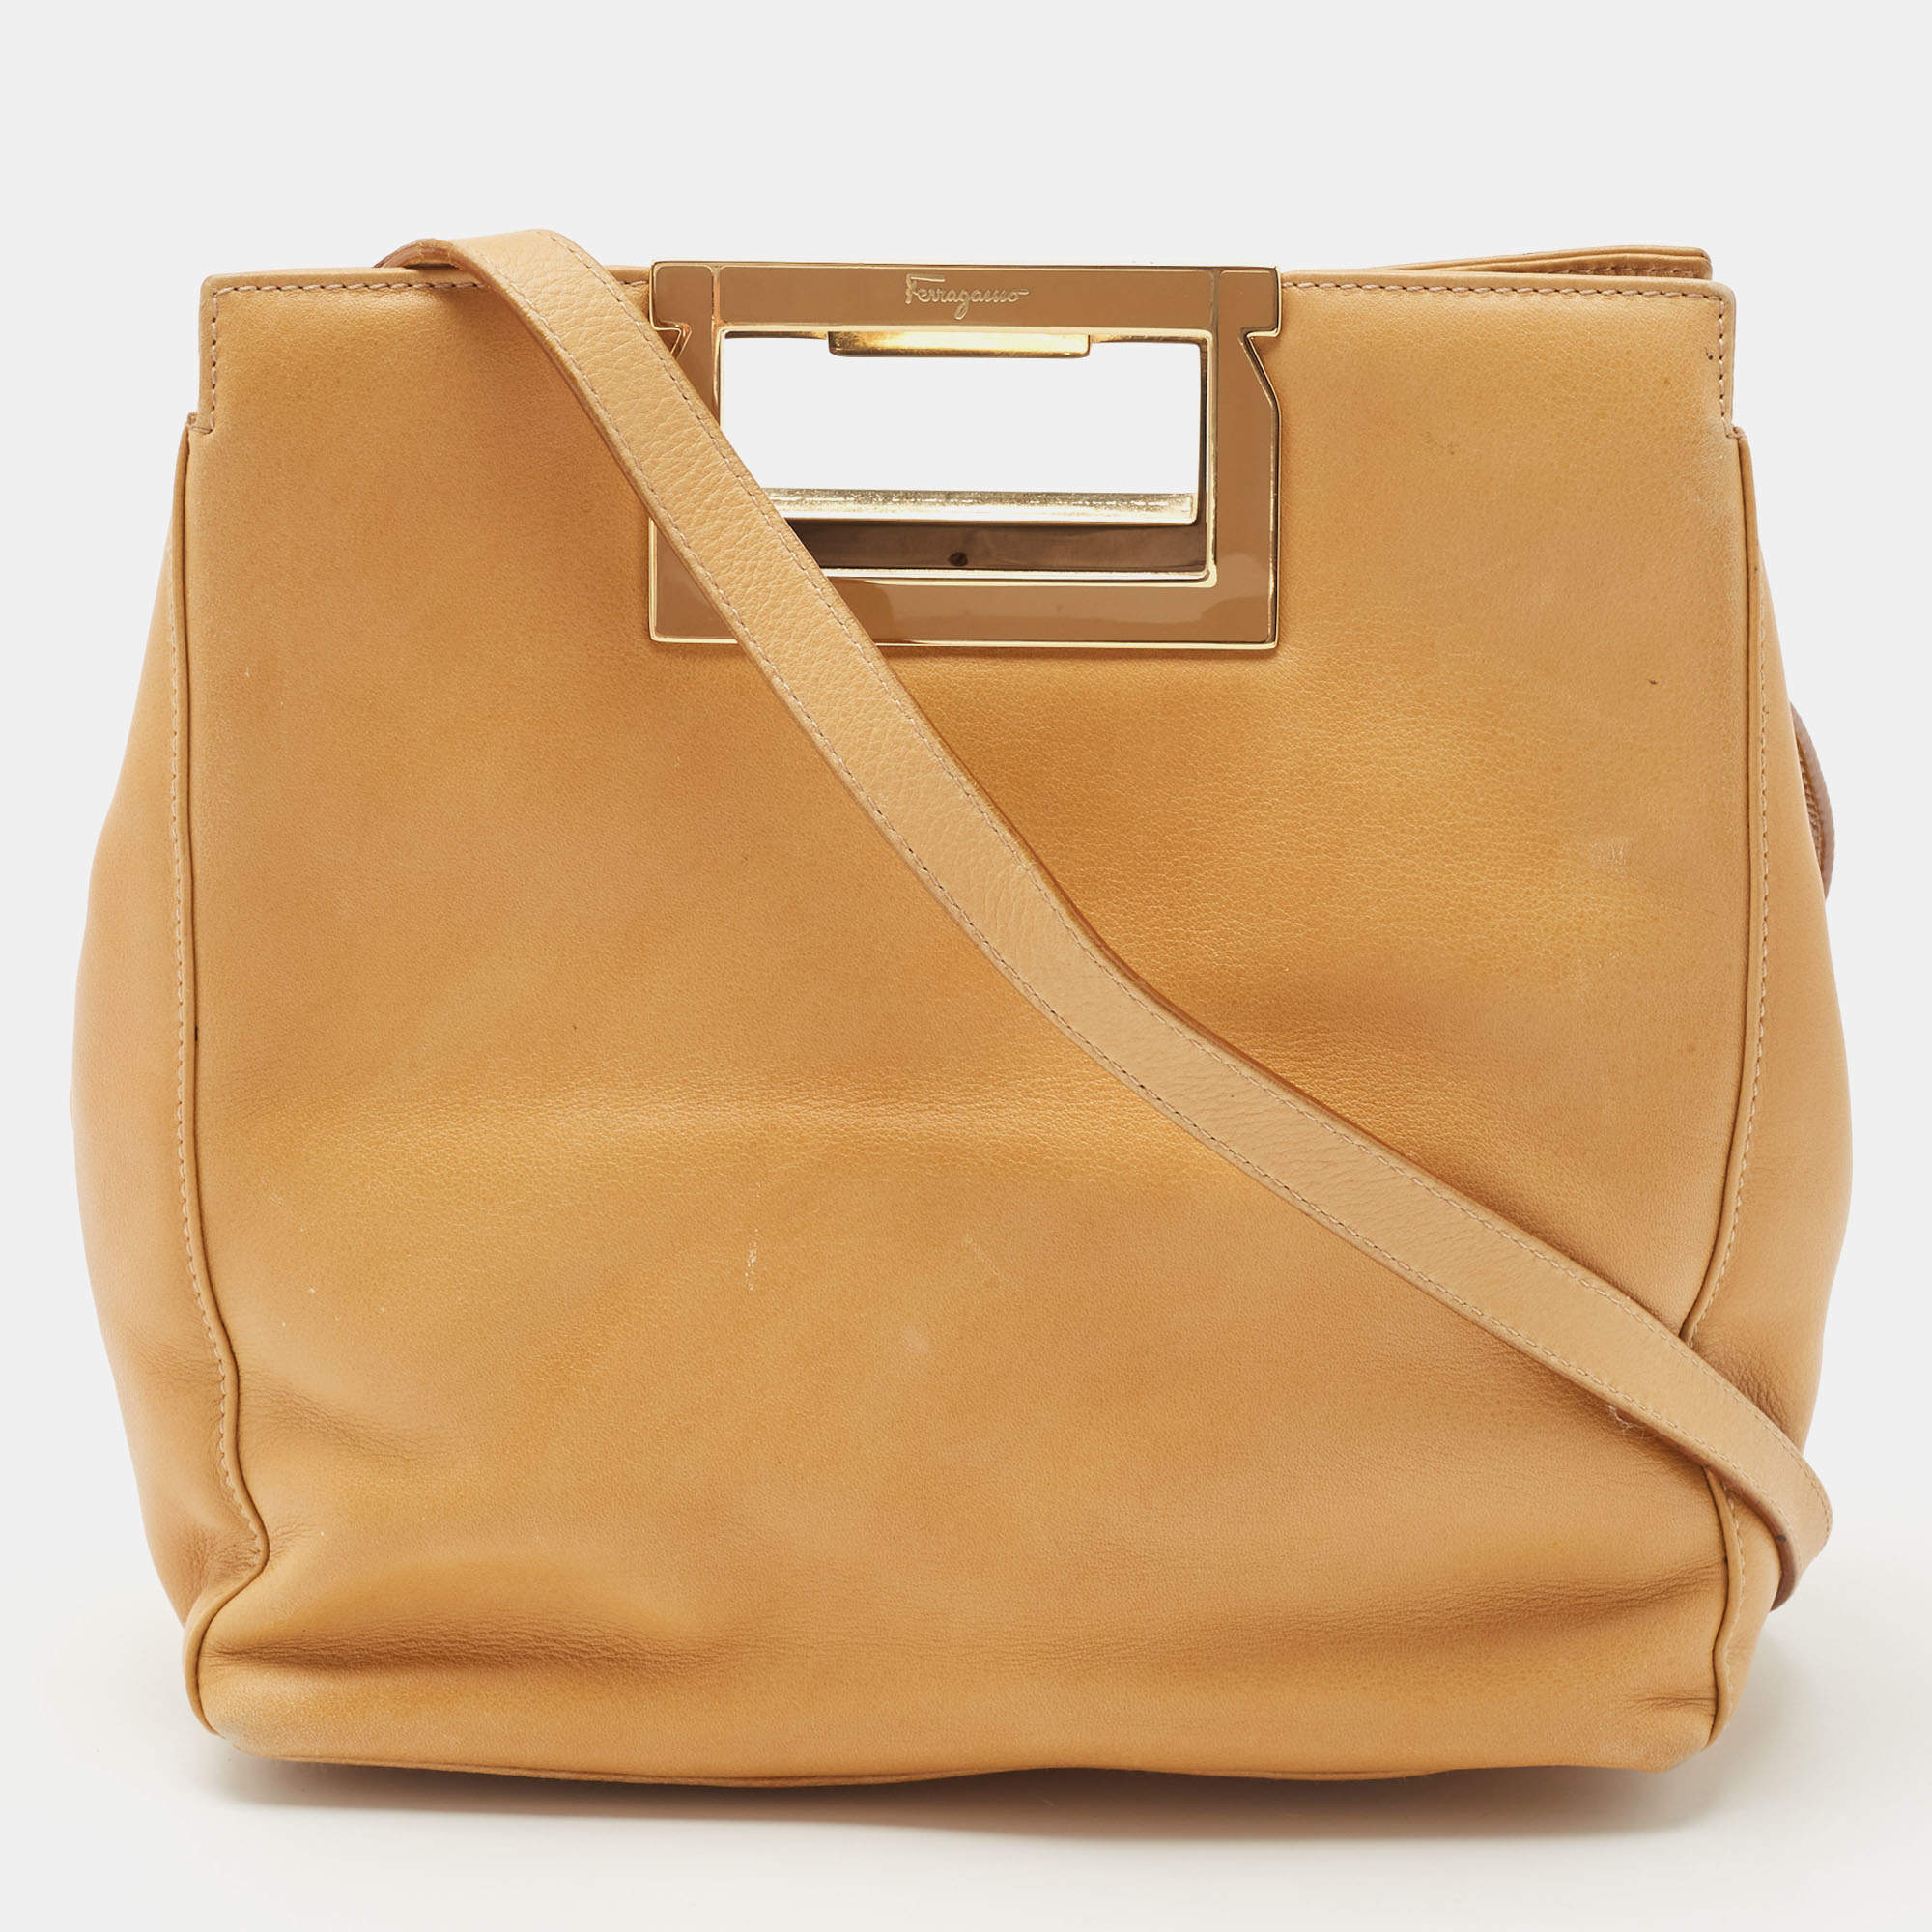 SALVATORE FERRAGAMO Brown Leather Shoulder Bag - The Purse Ladies